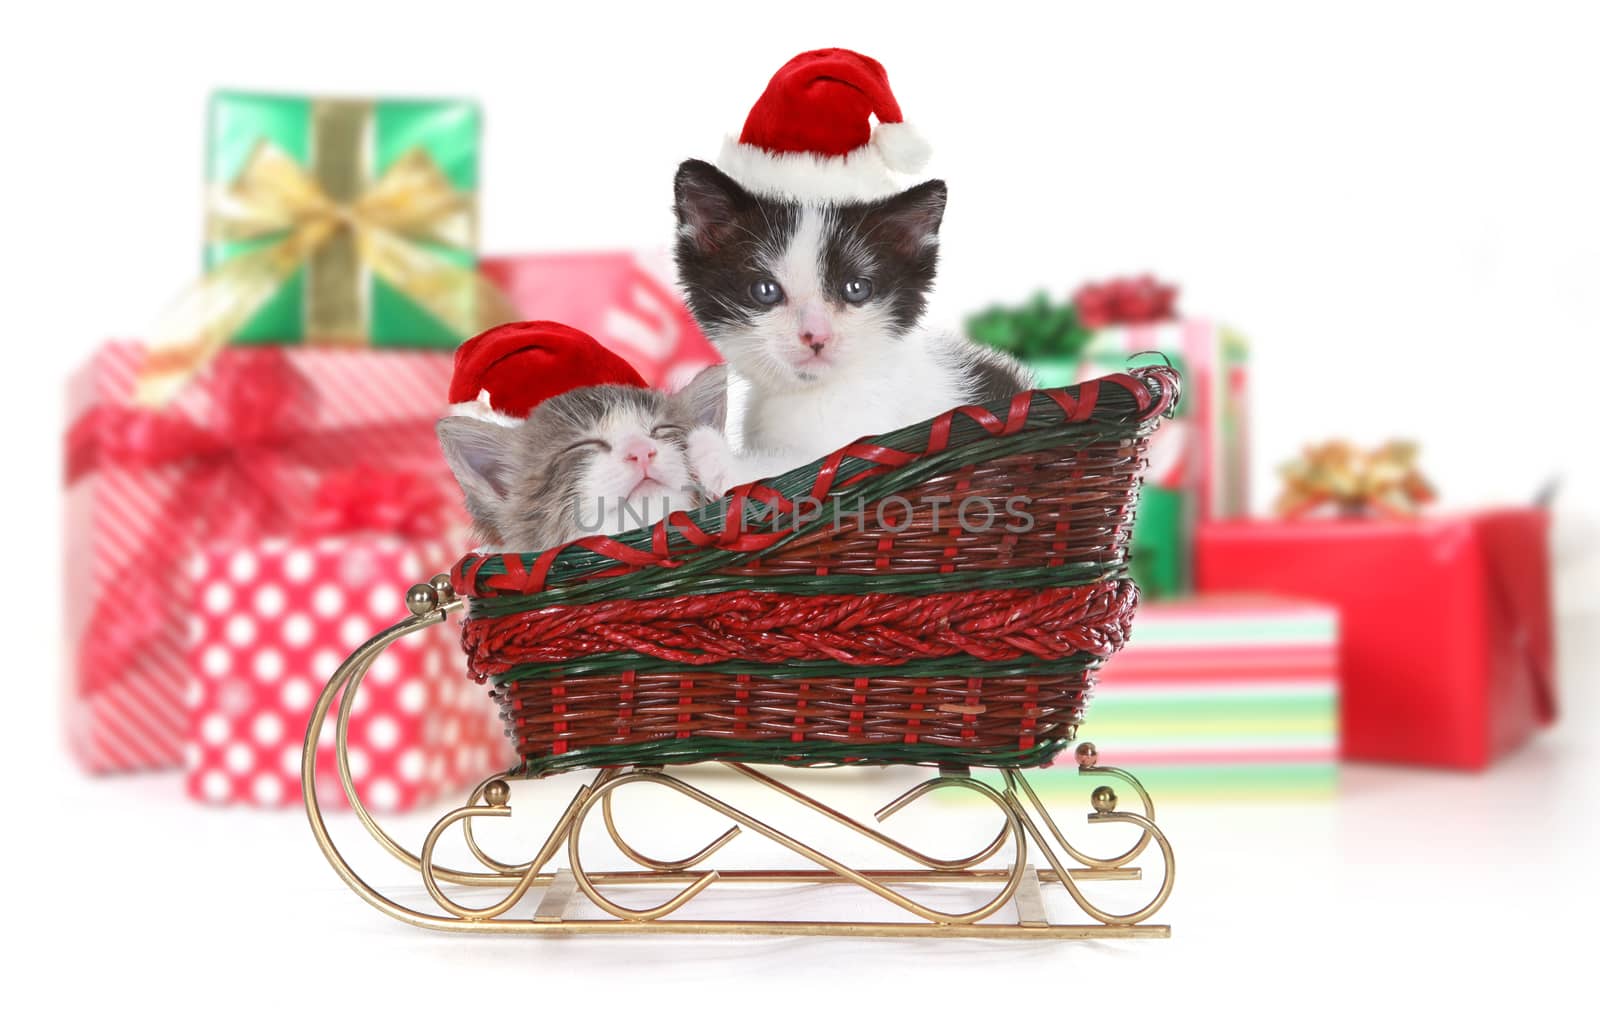 Cute Kittens in a Christmas Santa Sleigh by tobkatrina